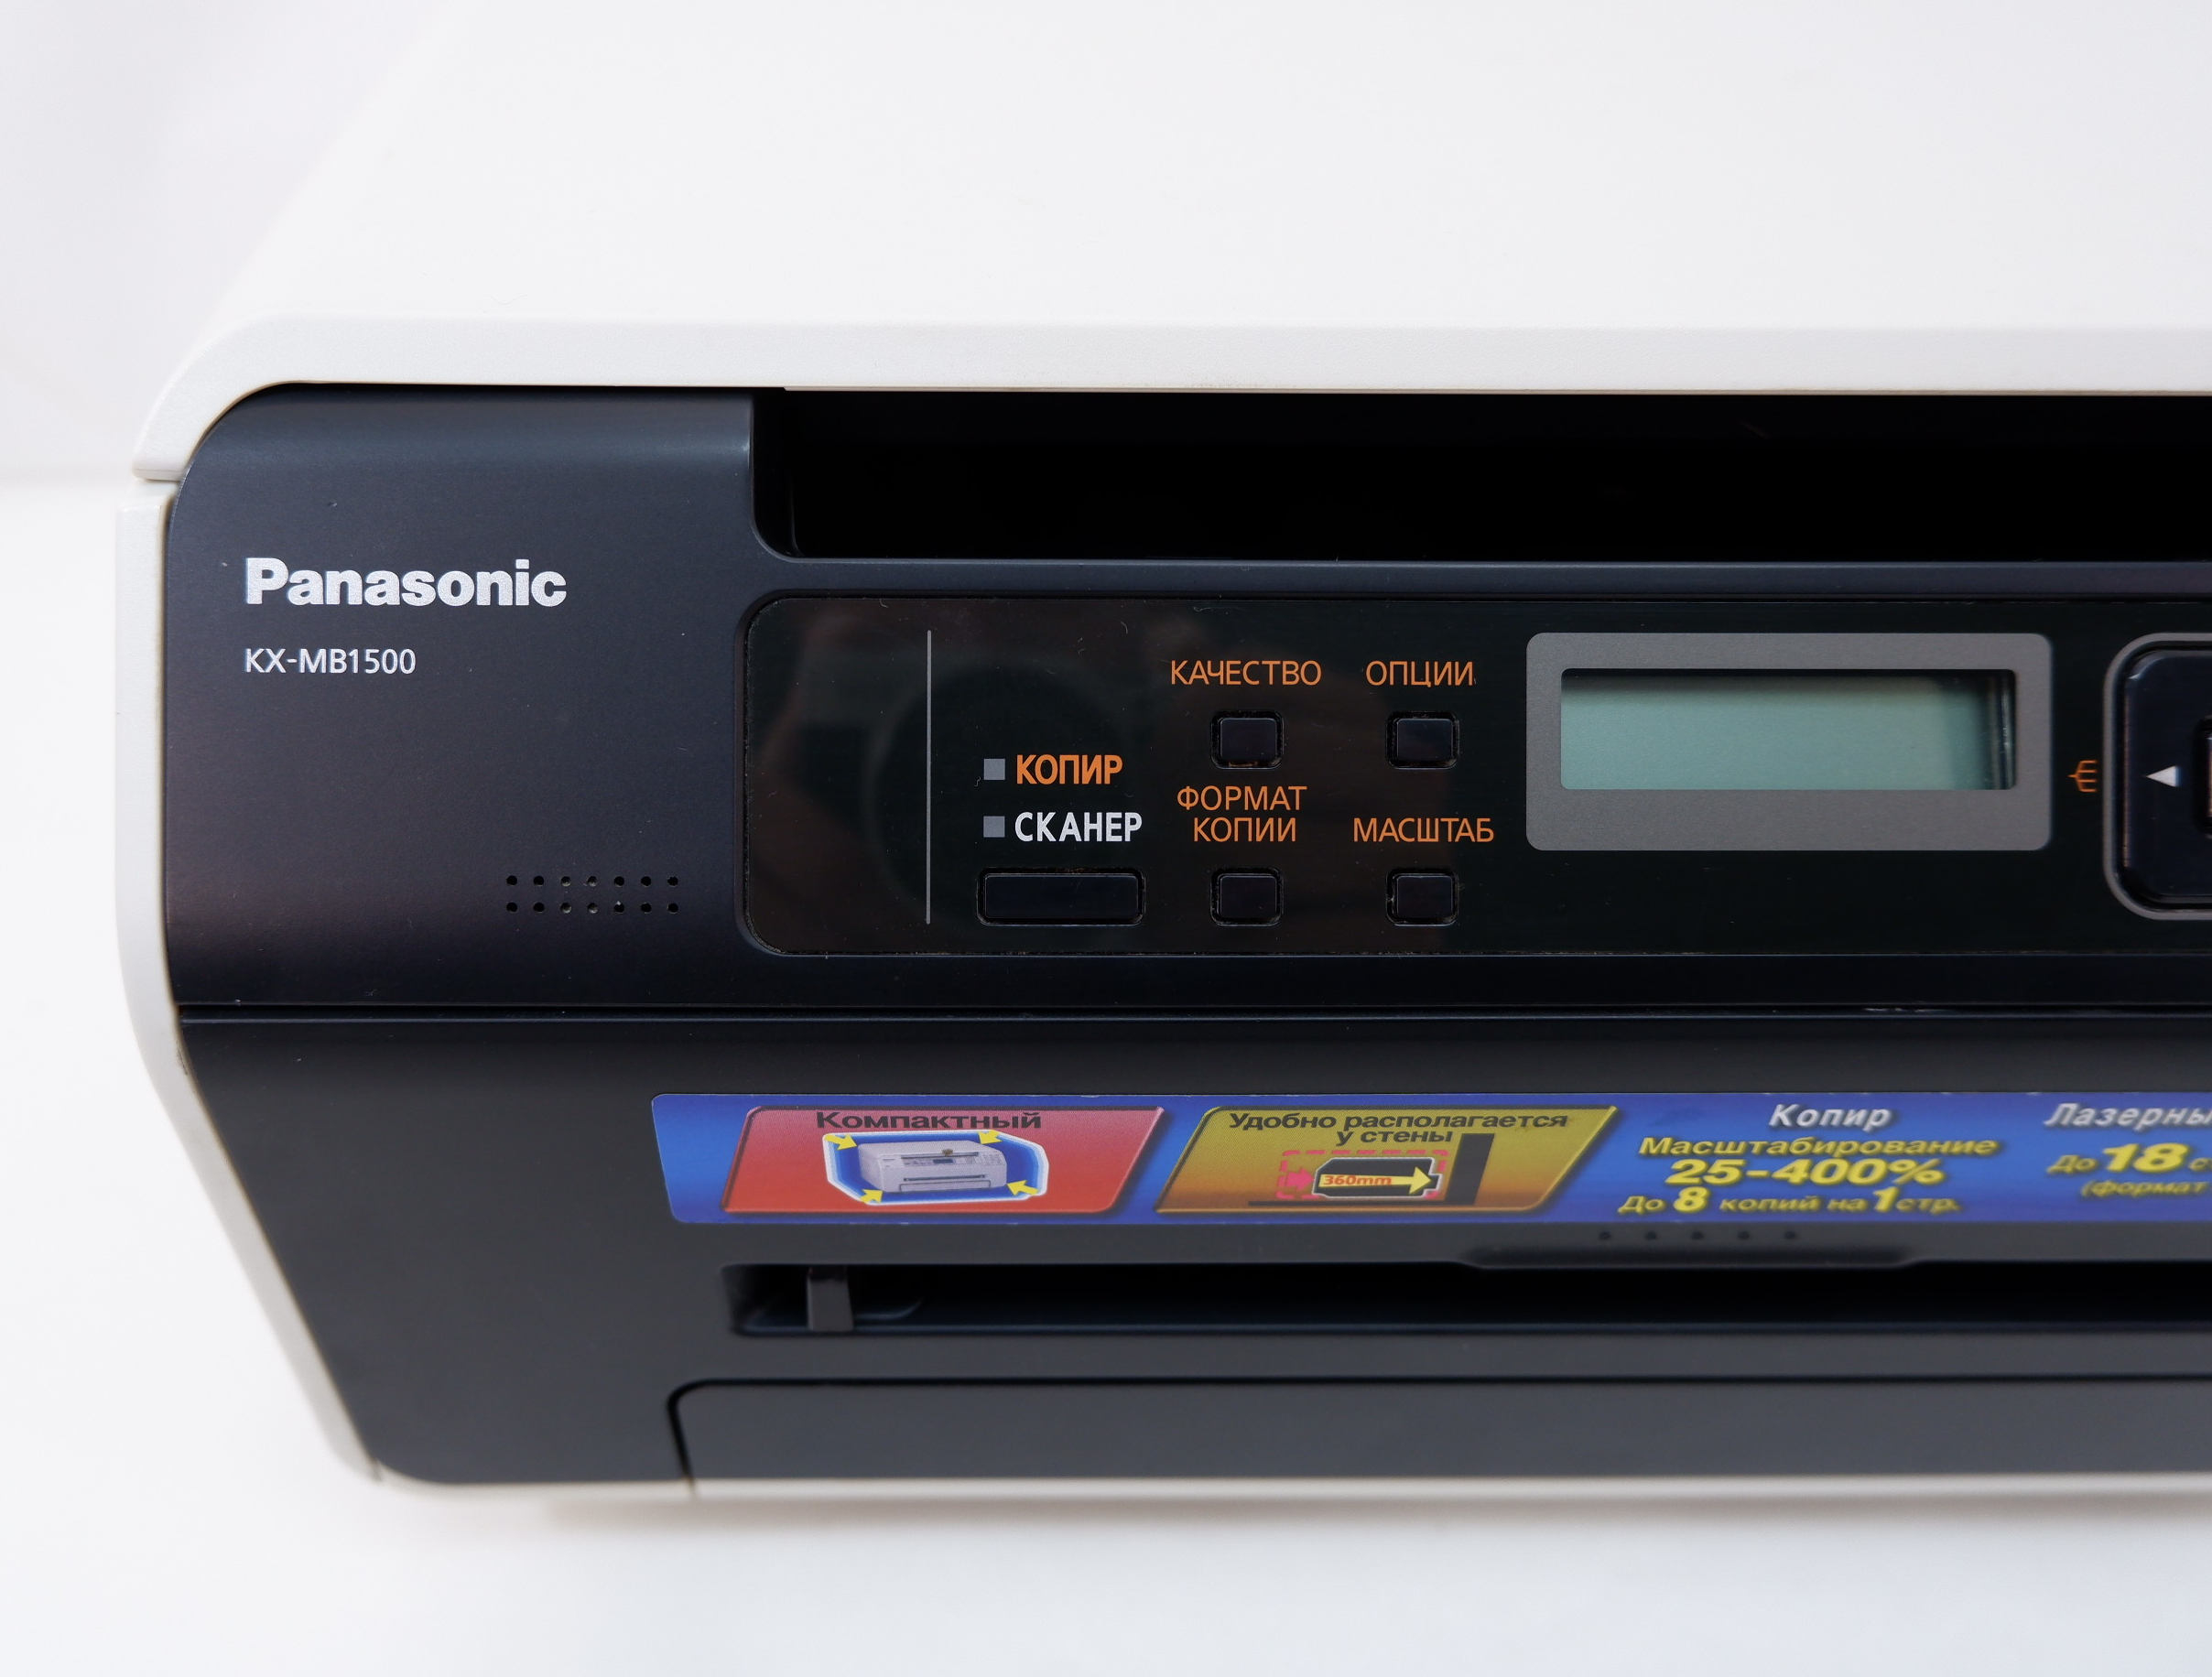 Panasonic kx mb1500 windows 10. МФУ Панасоник КХ-мв1500. Panasonic KX-mb1500. Принтер Panasonic KX-mb1500. Лазерный принтер Panasonic KX-mb1500.